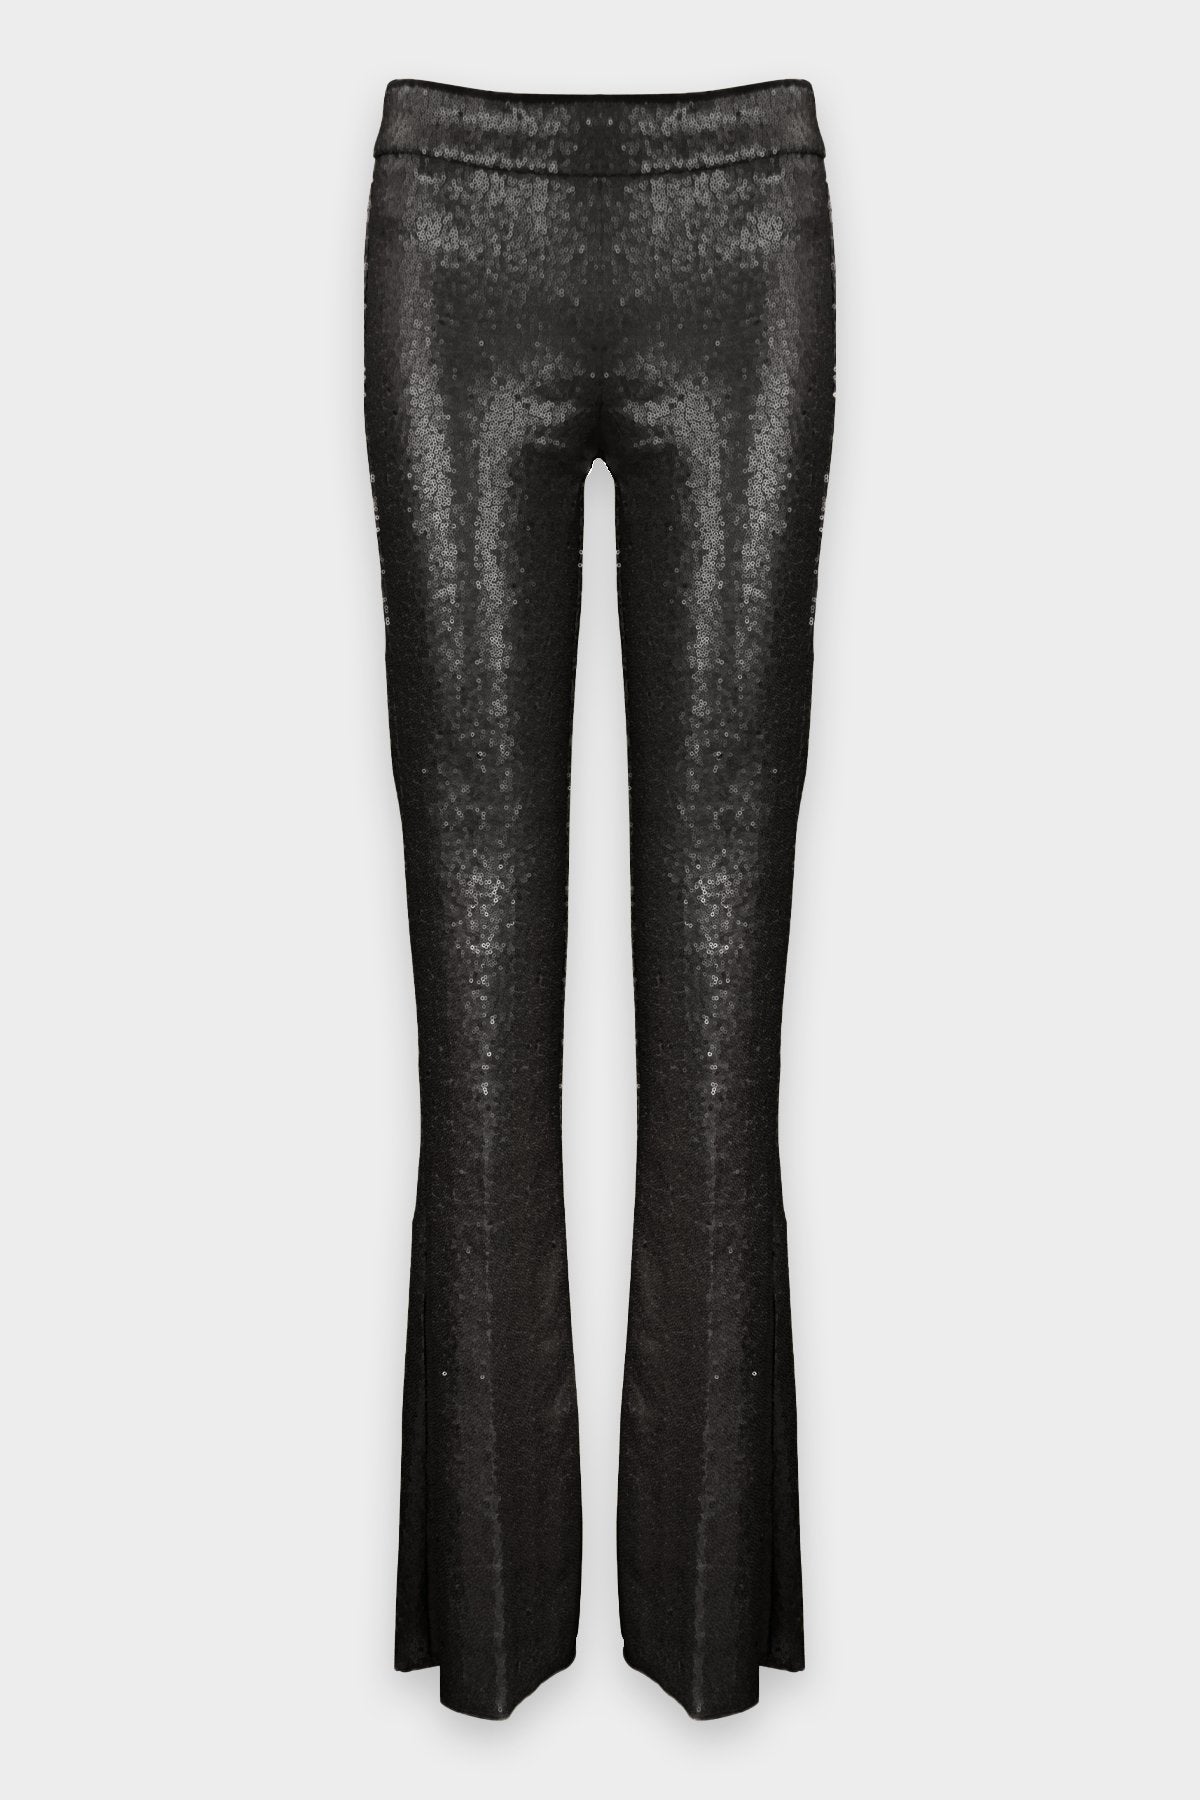 Bellini Sequin Pant in Black - shop-olivia.com